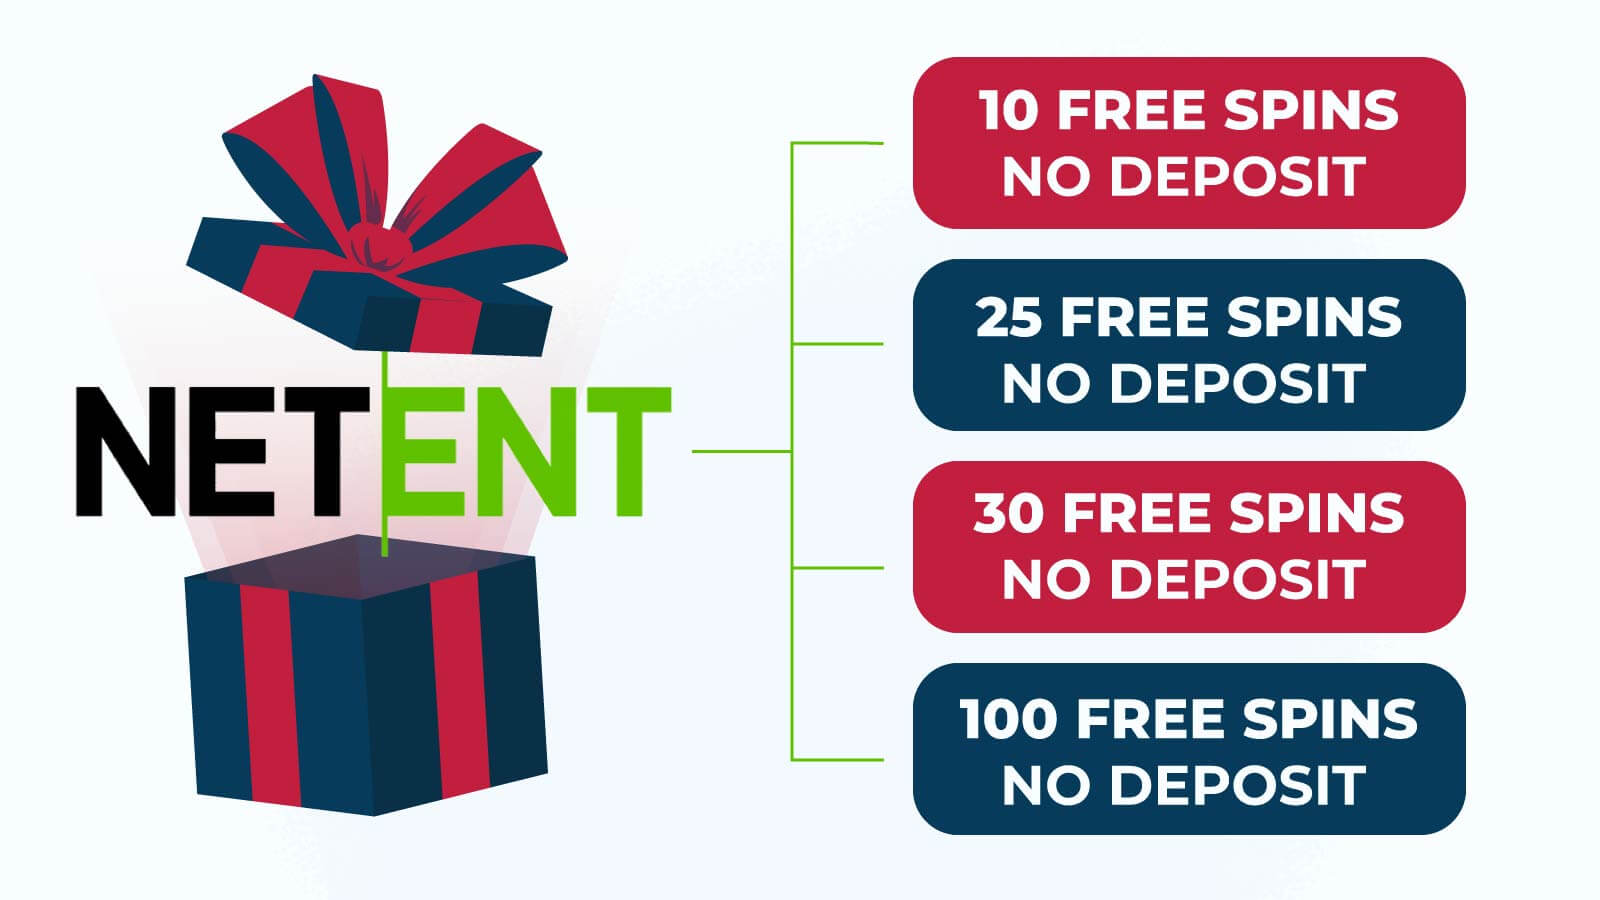 Types of NetEnt Free Spins No Deposit Bonuses